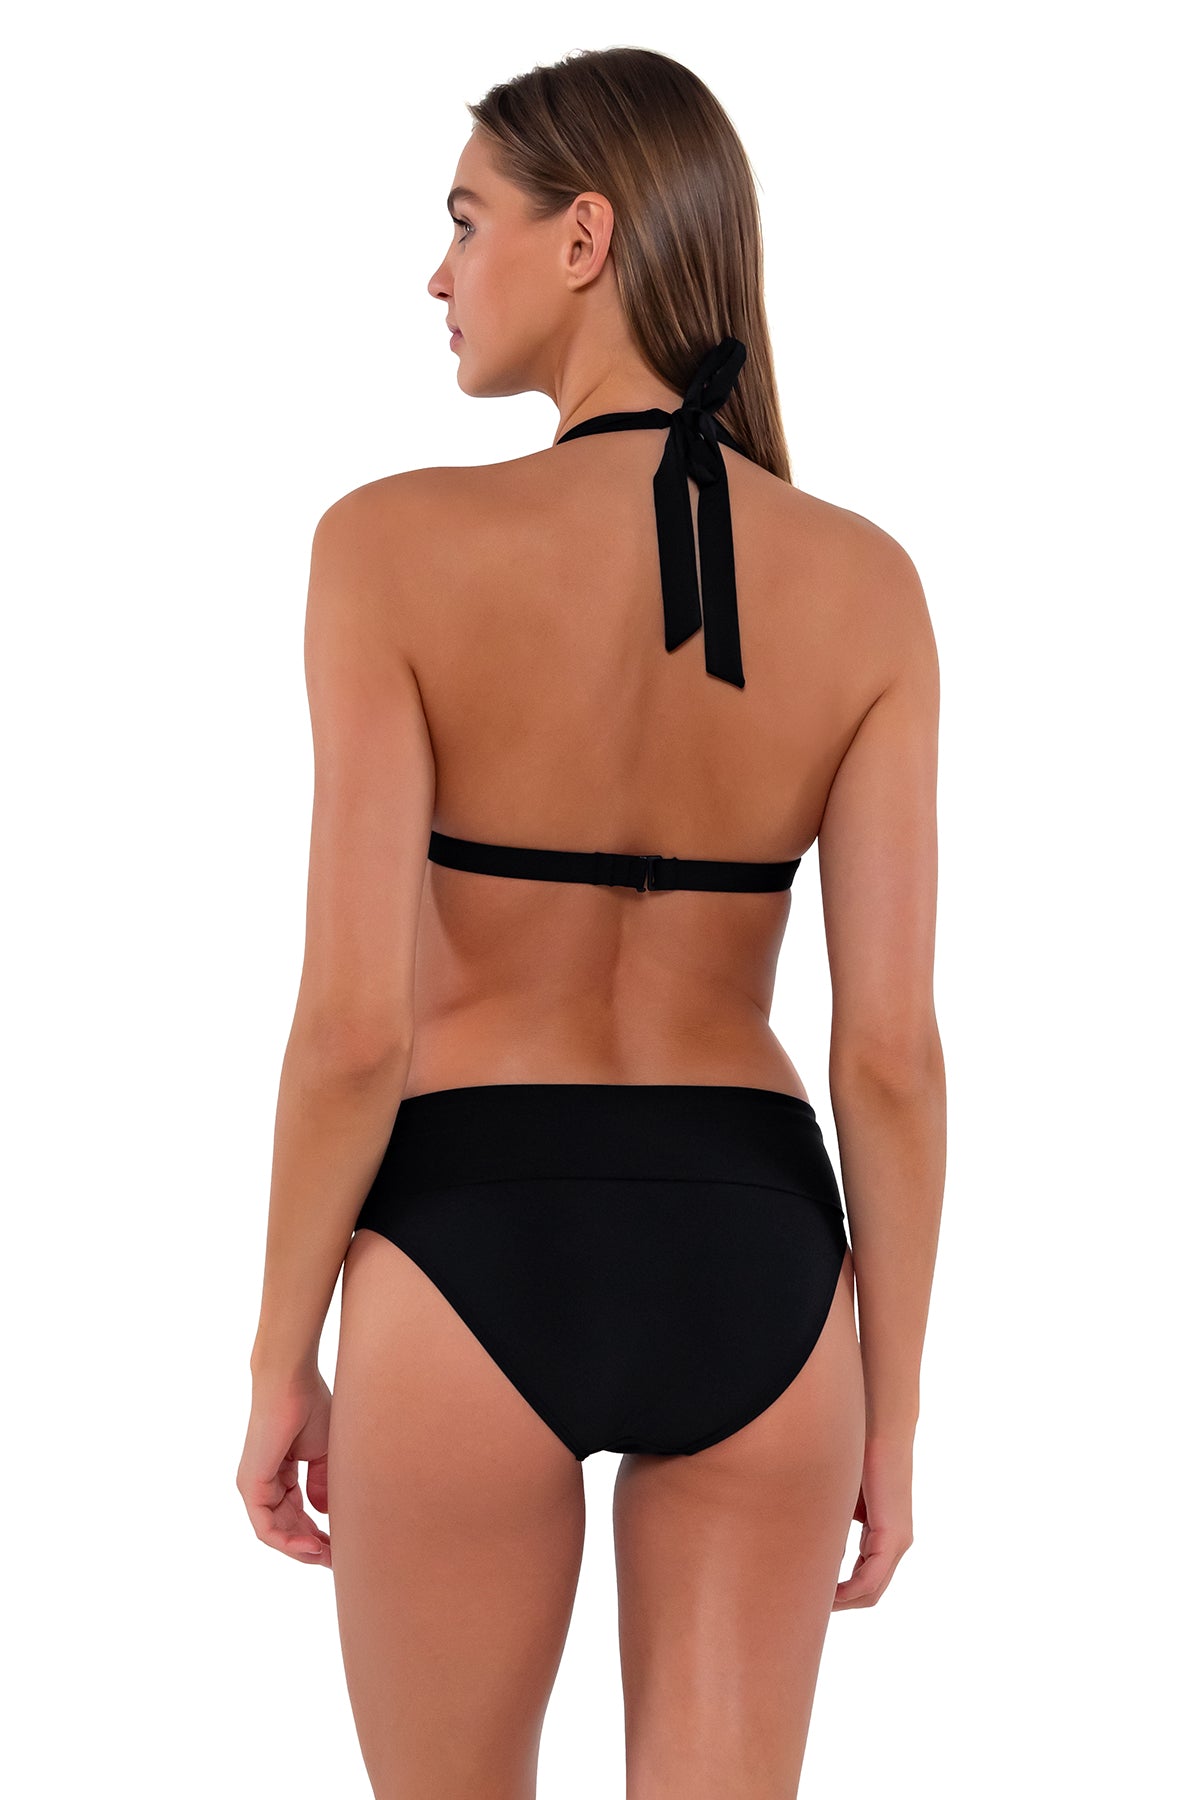 Back pose #1 of Daria wearing Sunsets Black Faith Halter Top with matching Hannah High Waist bikini bottom showing folded waist